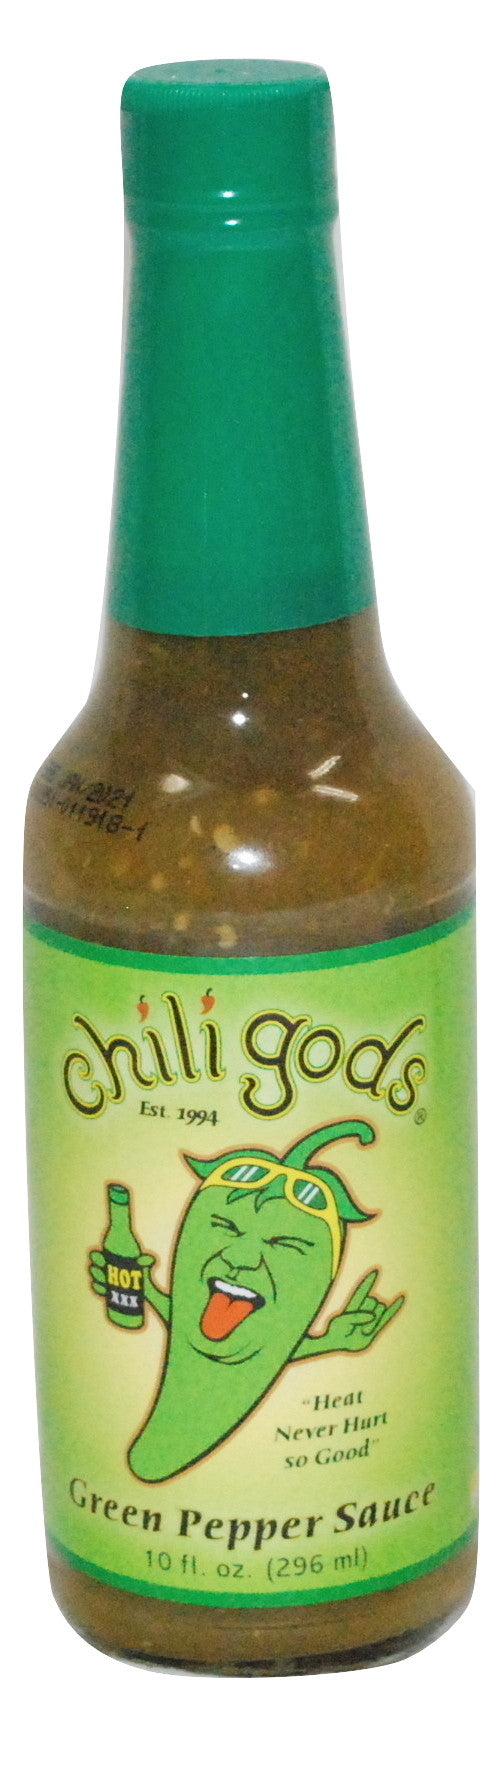 Chiligods Green Pepper Sauce